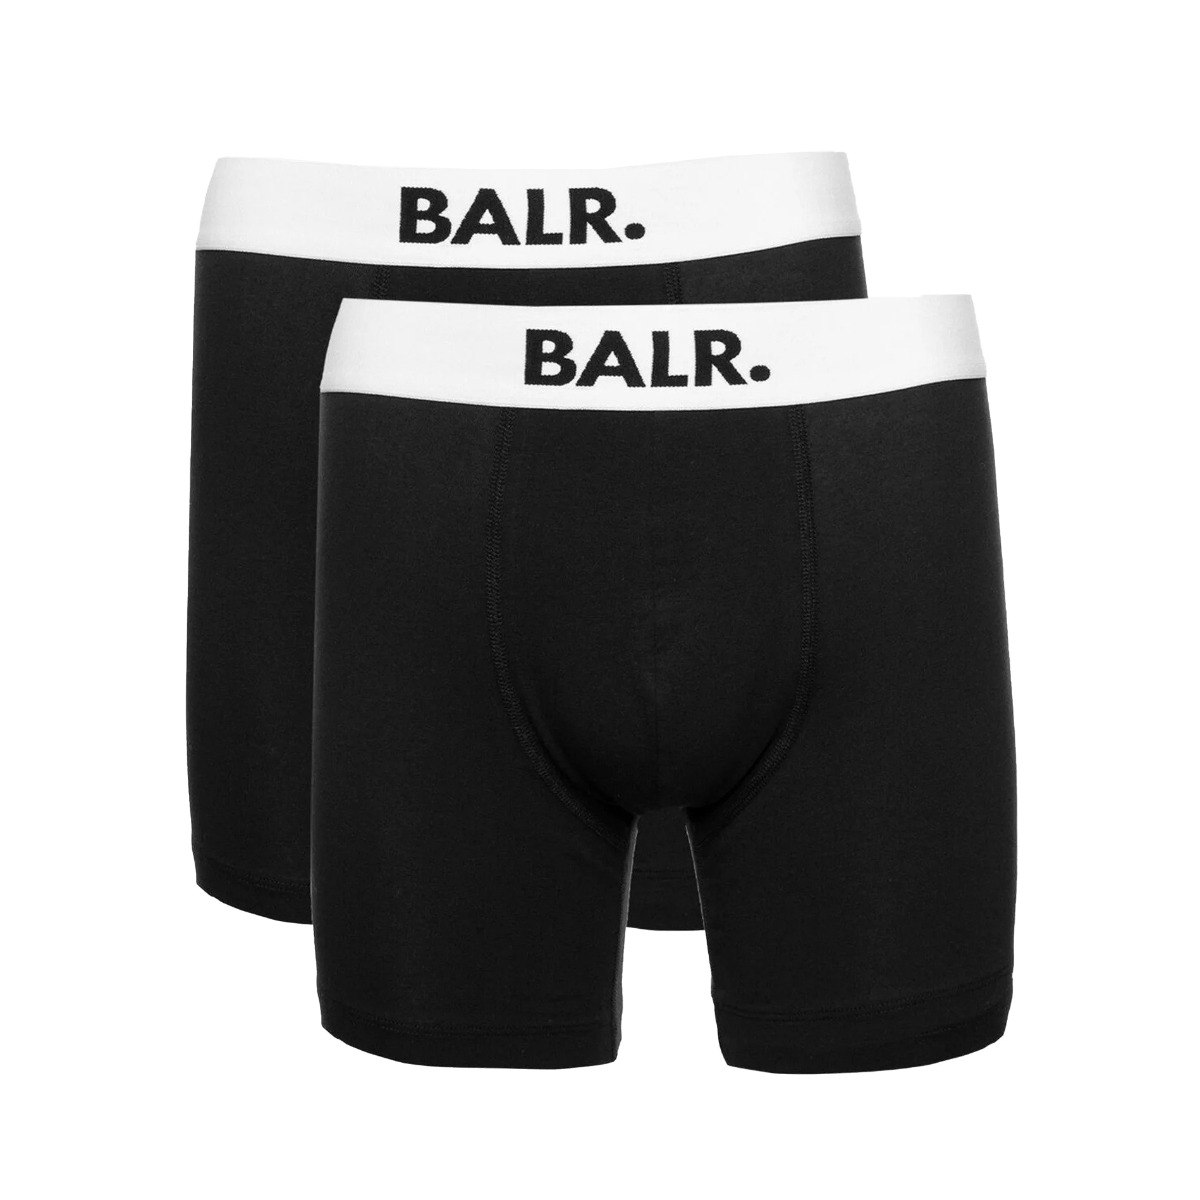 Afbeelding van BALR. 2-pack boxers